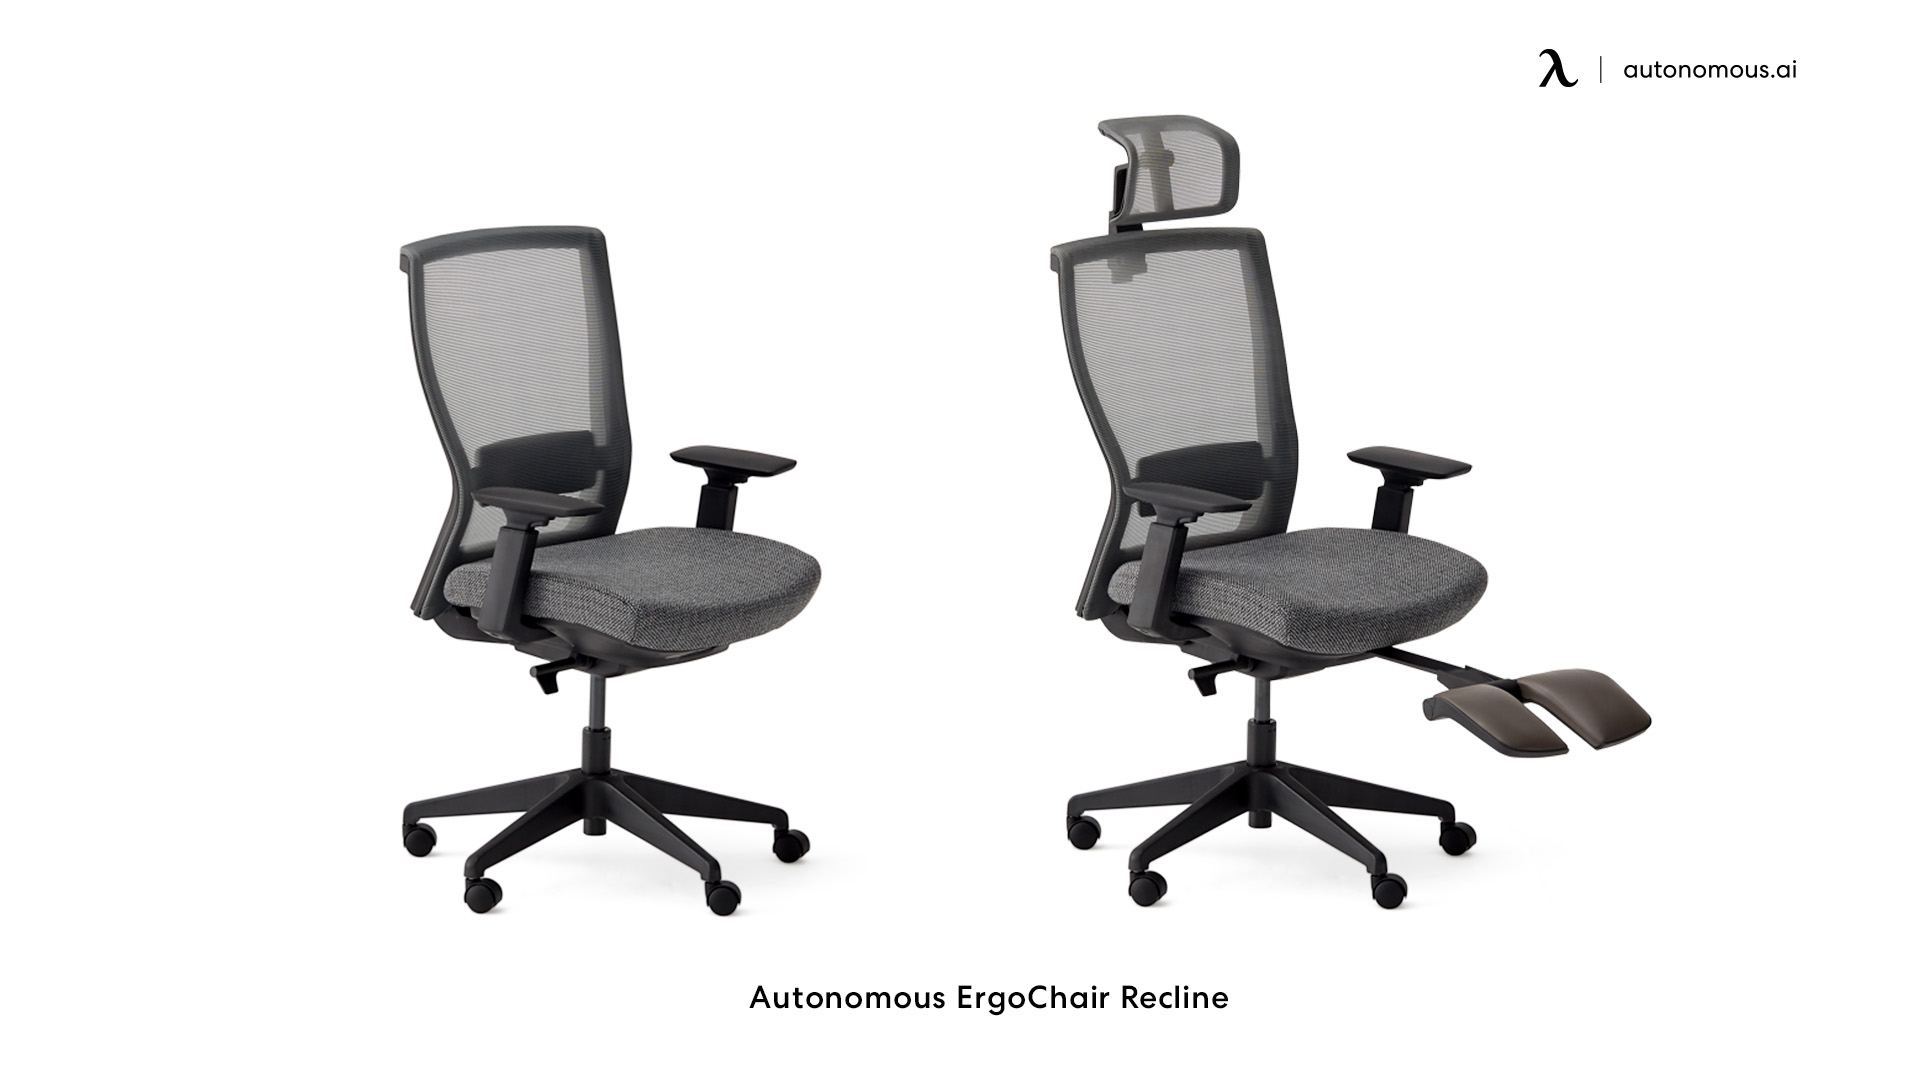 Autonomous ErgoChair Recline affordable mesh chair